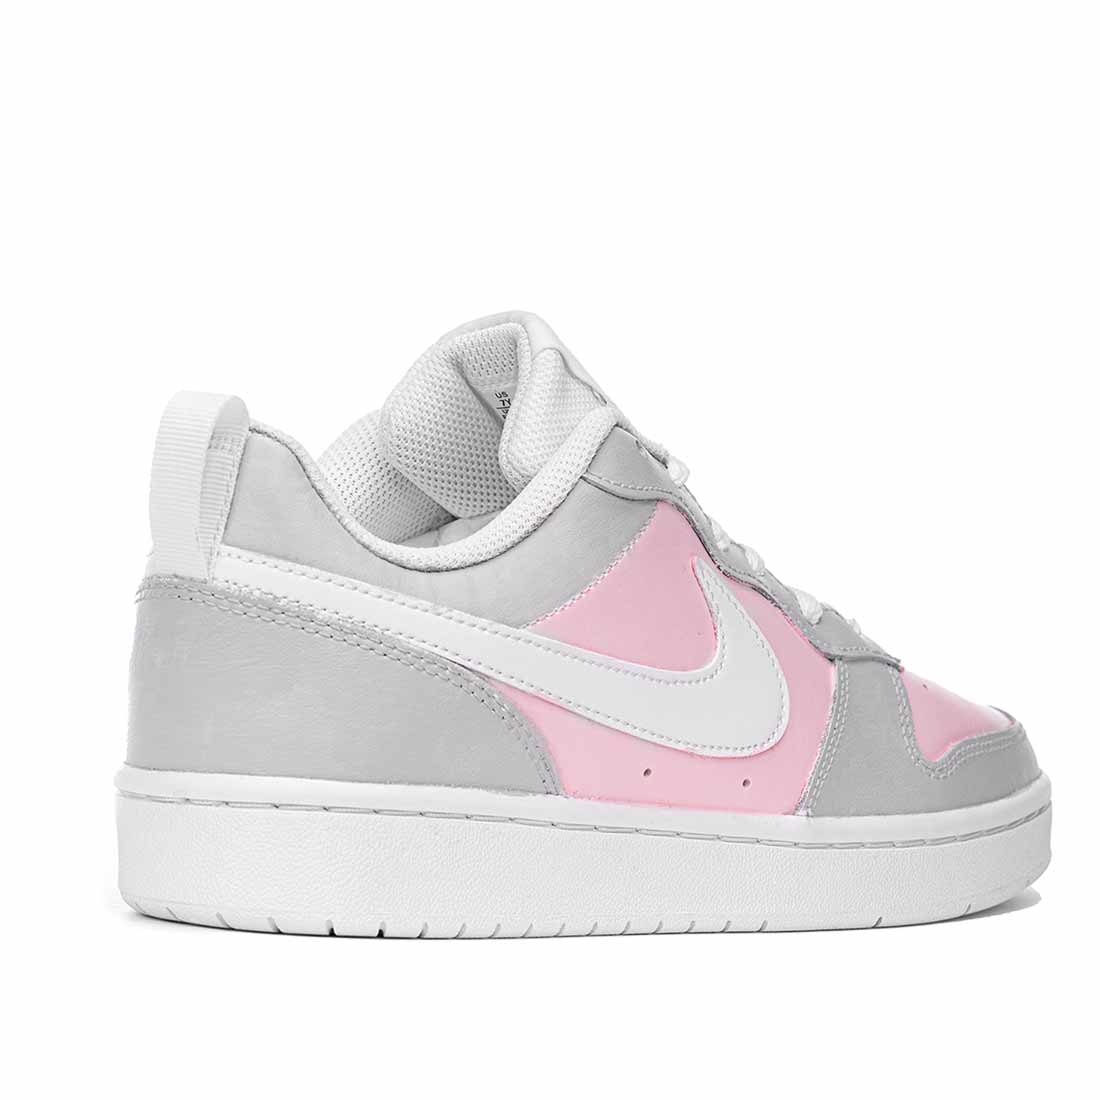 Nike rosa e grigio chiaro